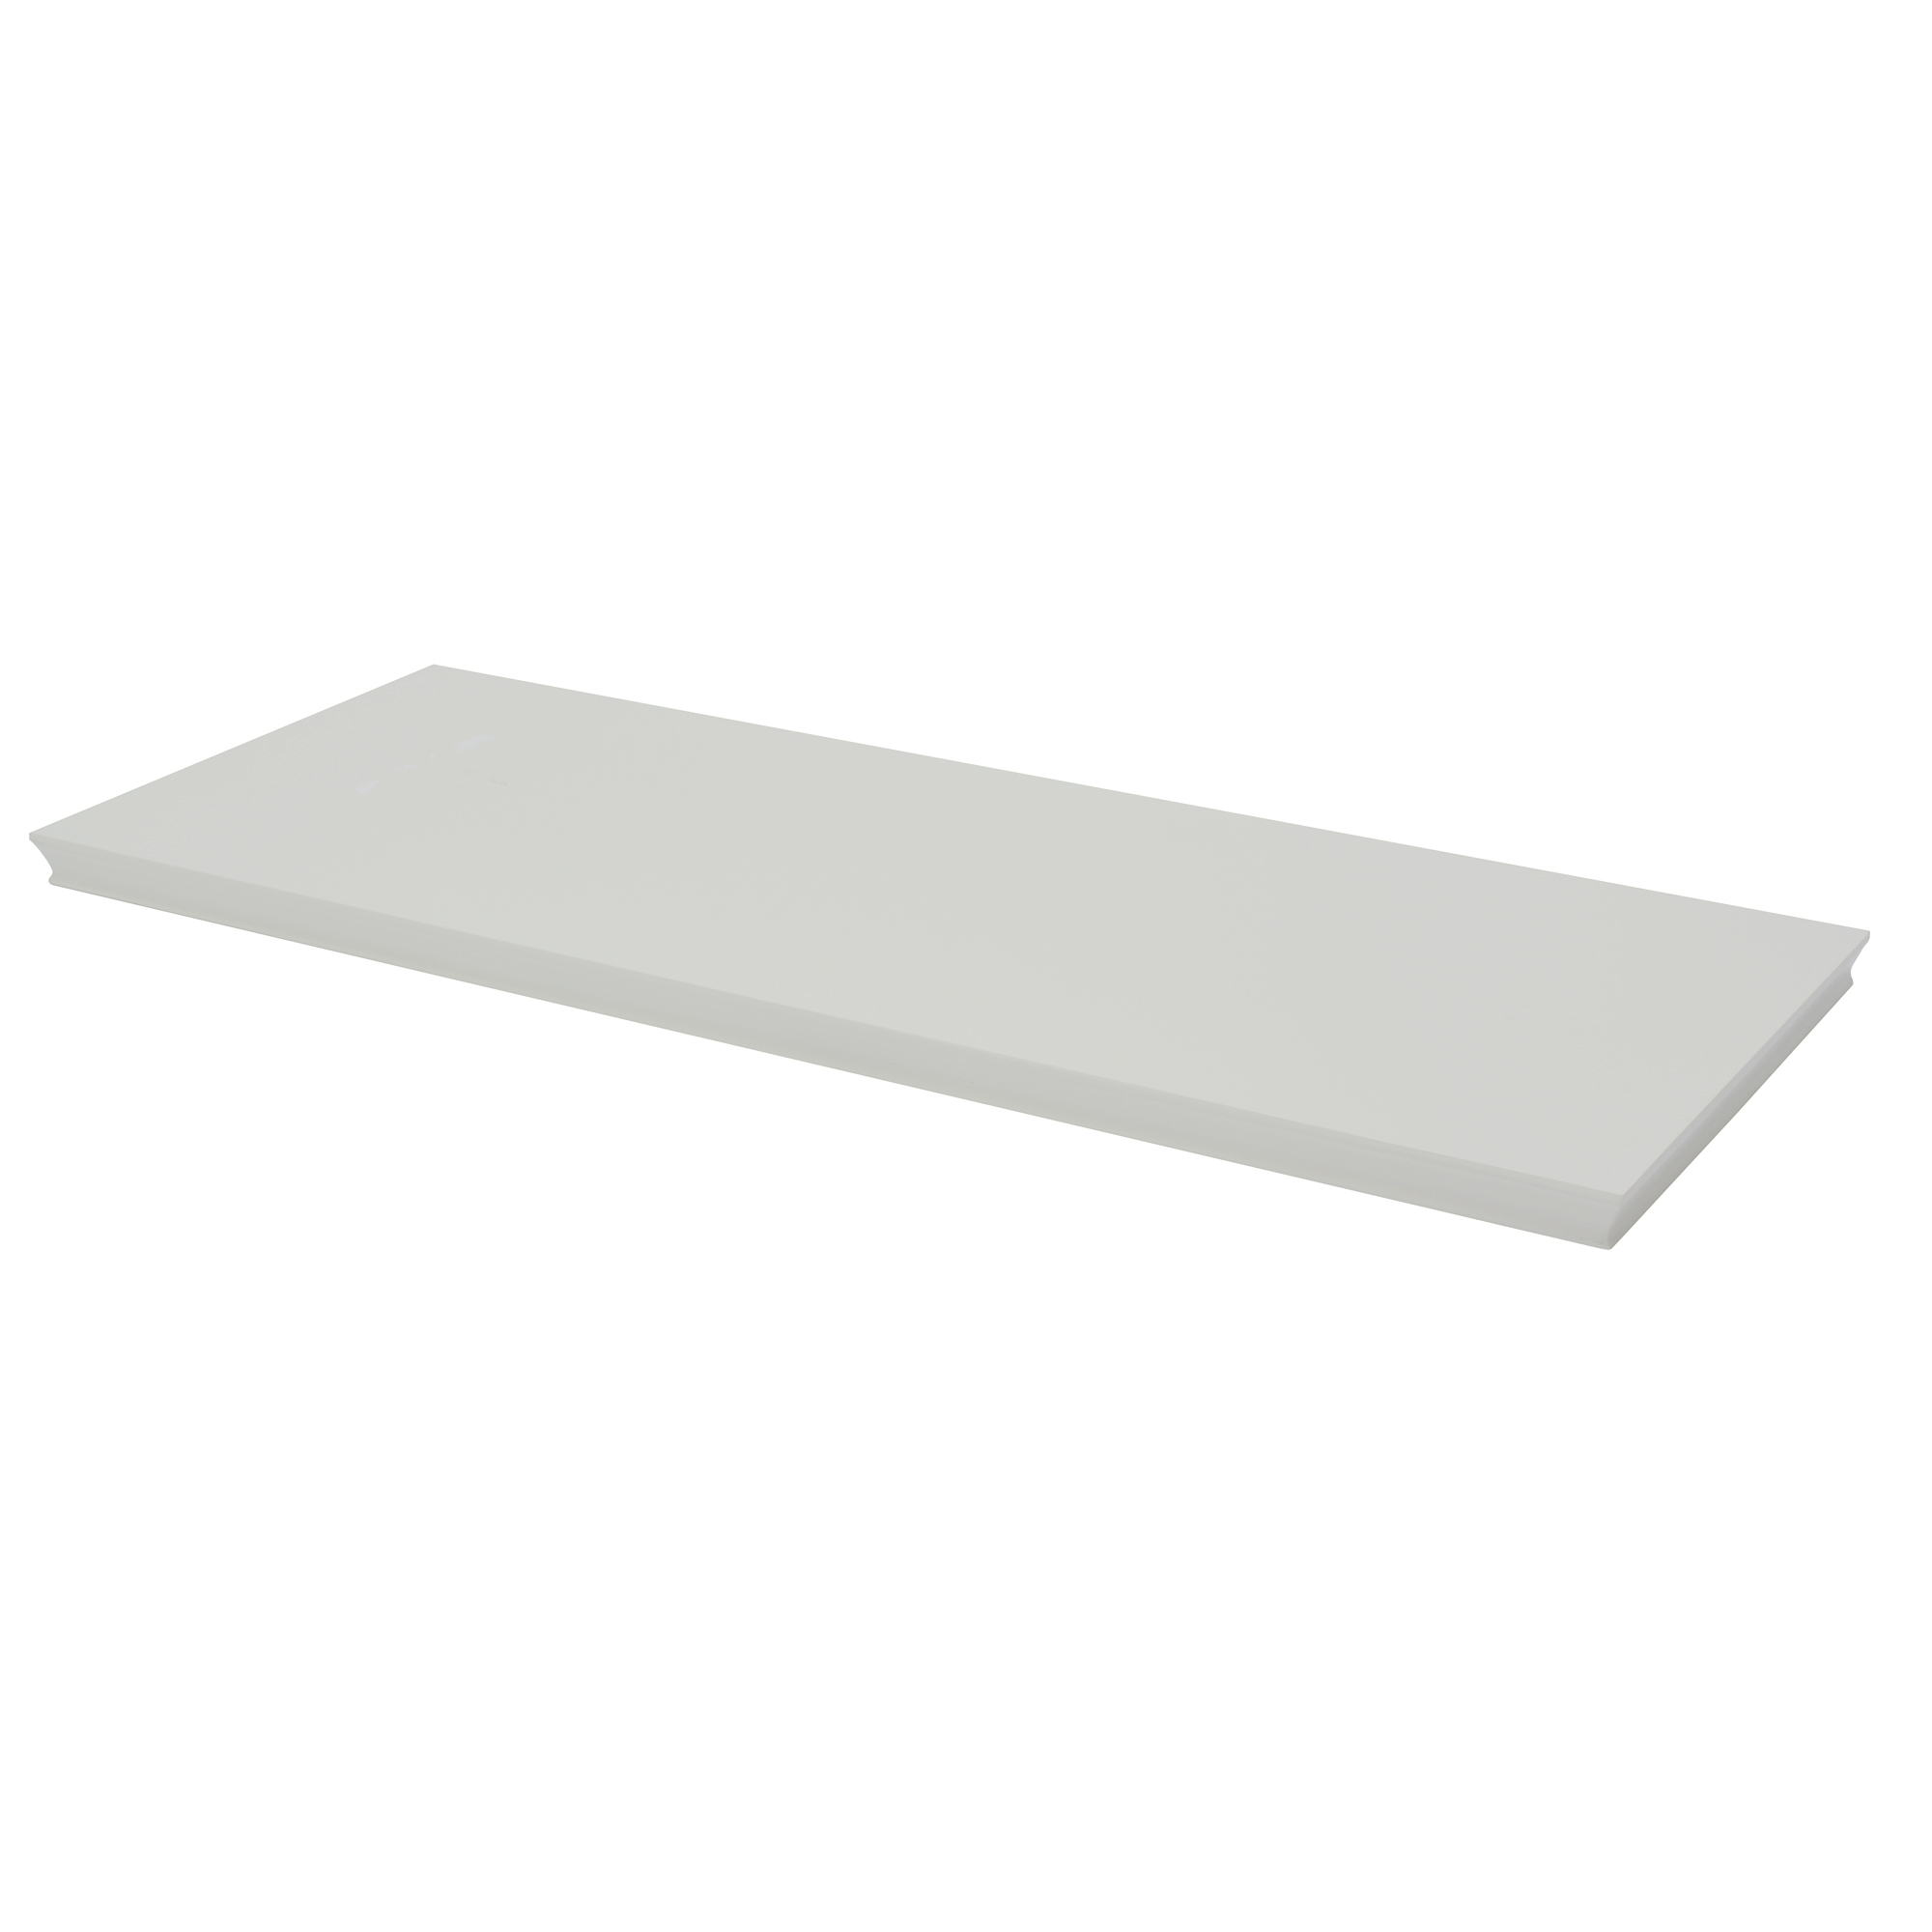 Pekodom Provence Board White Floating Wall Shelf 600 x 235 x 20mm RRP 9.99 CLEARANCE XL 2.50